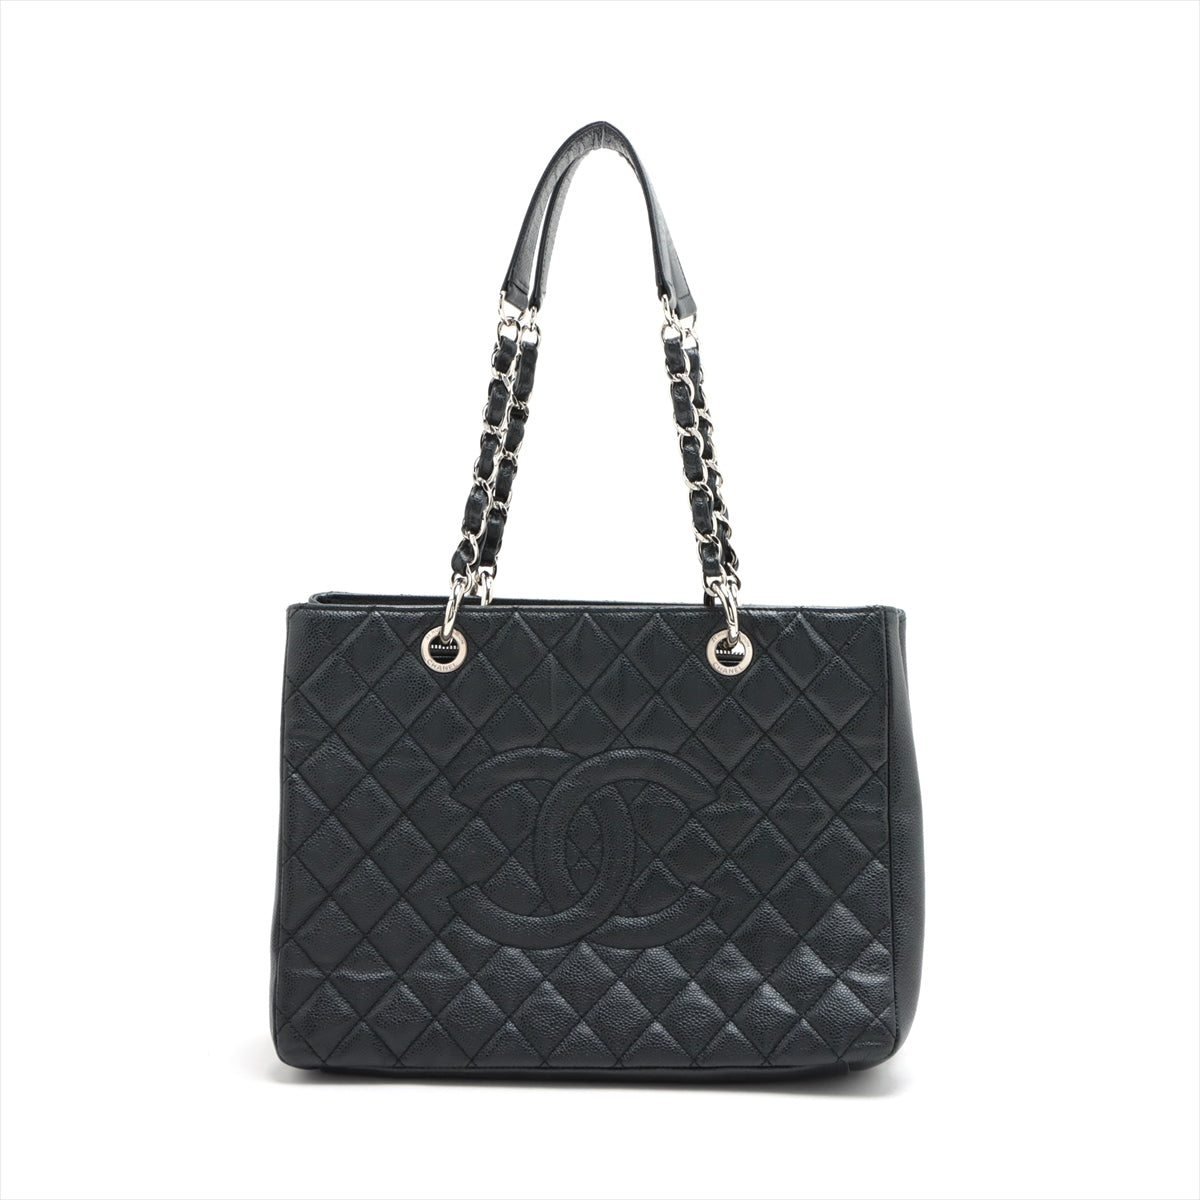 Chanel GST Caviar Skin Chain Tote Bag Black Silver Metal Fittings 16XXXXXX